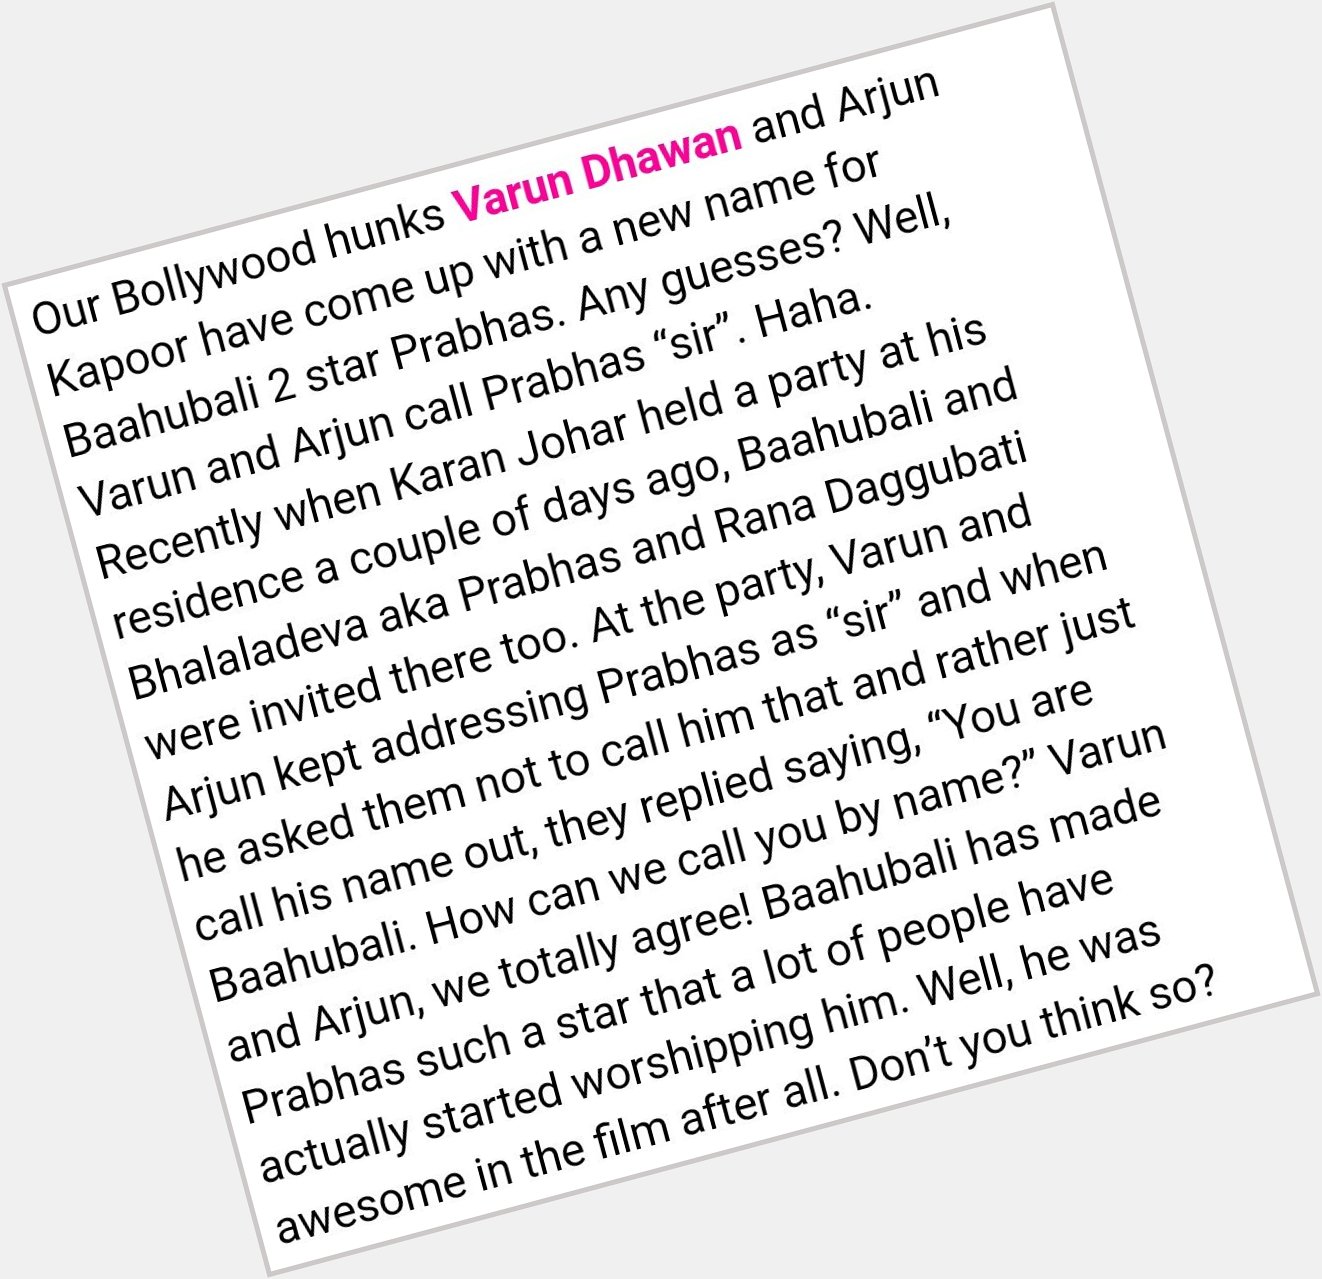 Happy Birthday  Varun Dhawan and Arjun Kapoor refuse to address Prabhas by his name because .